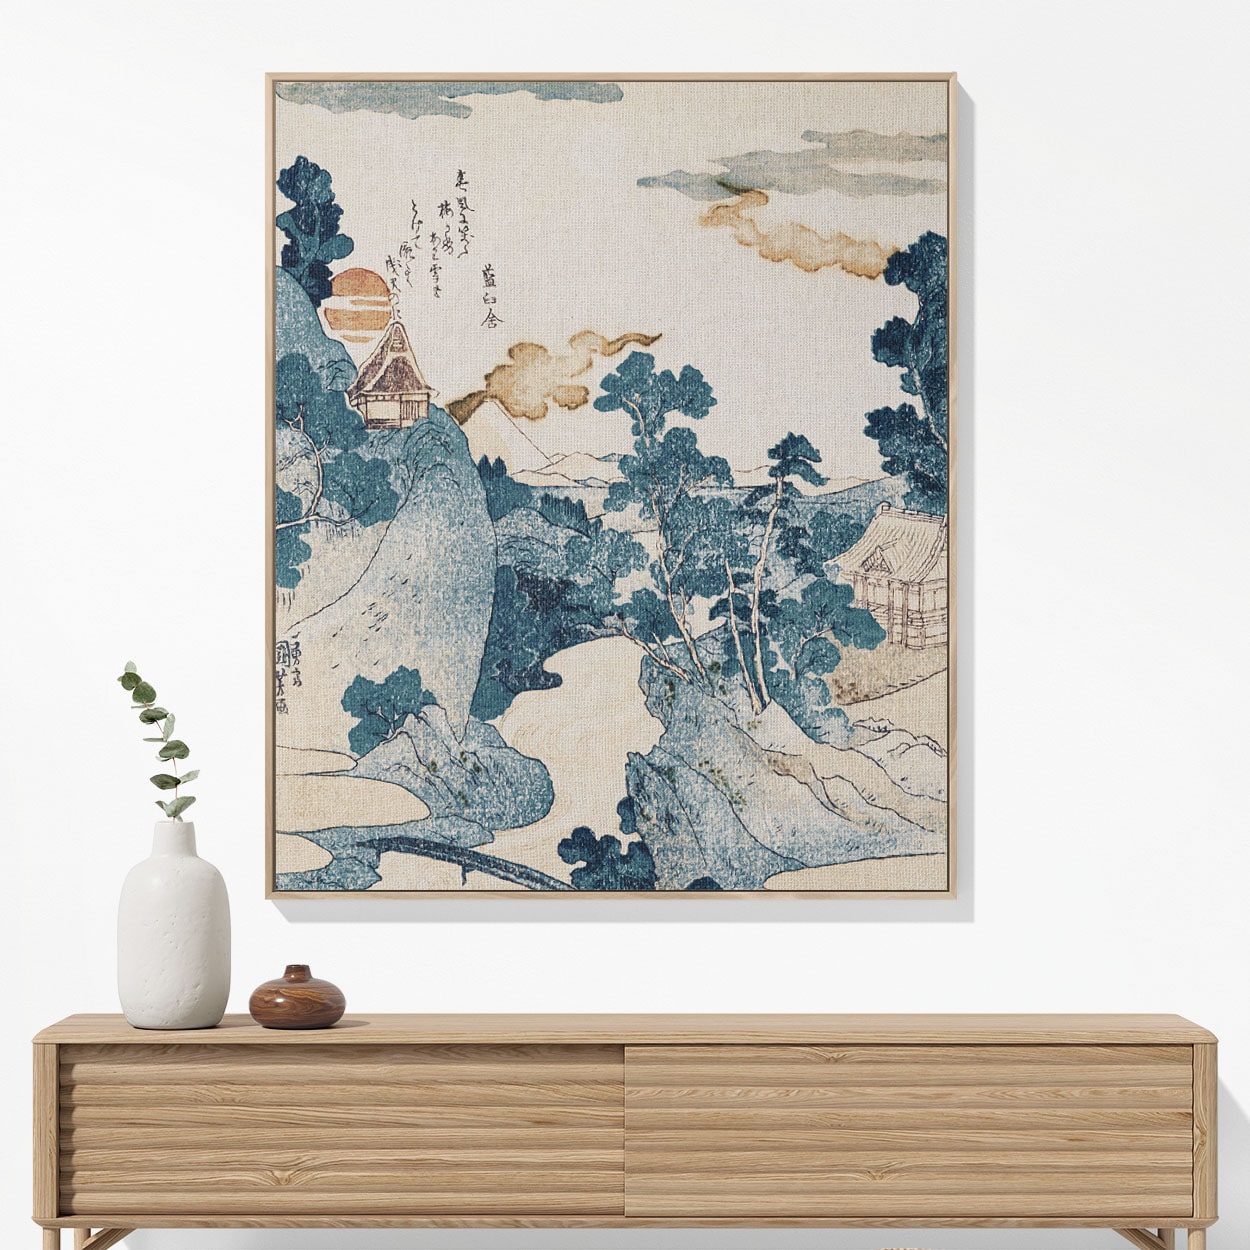 Japanese Woven Blanket | Blue Mountain Landscape | Cozy Cotton Throw Blanket